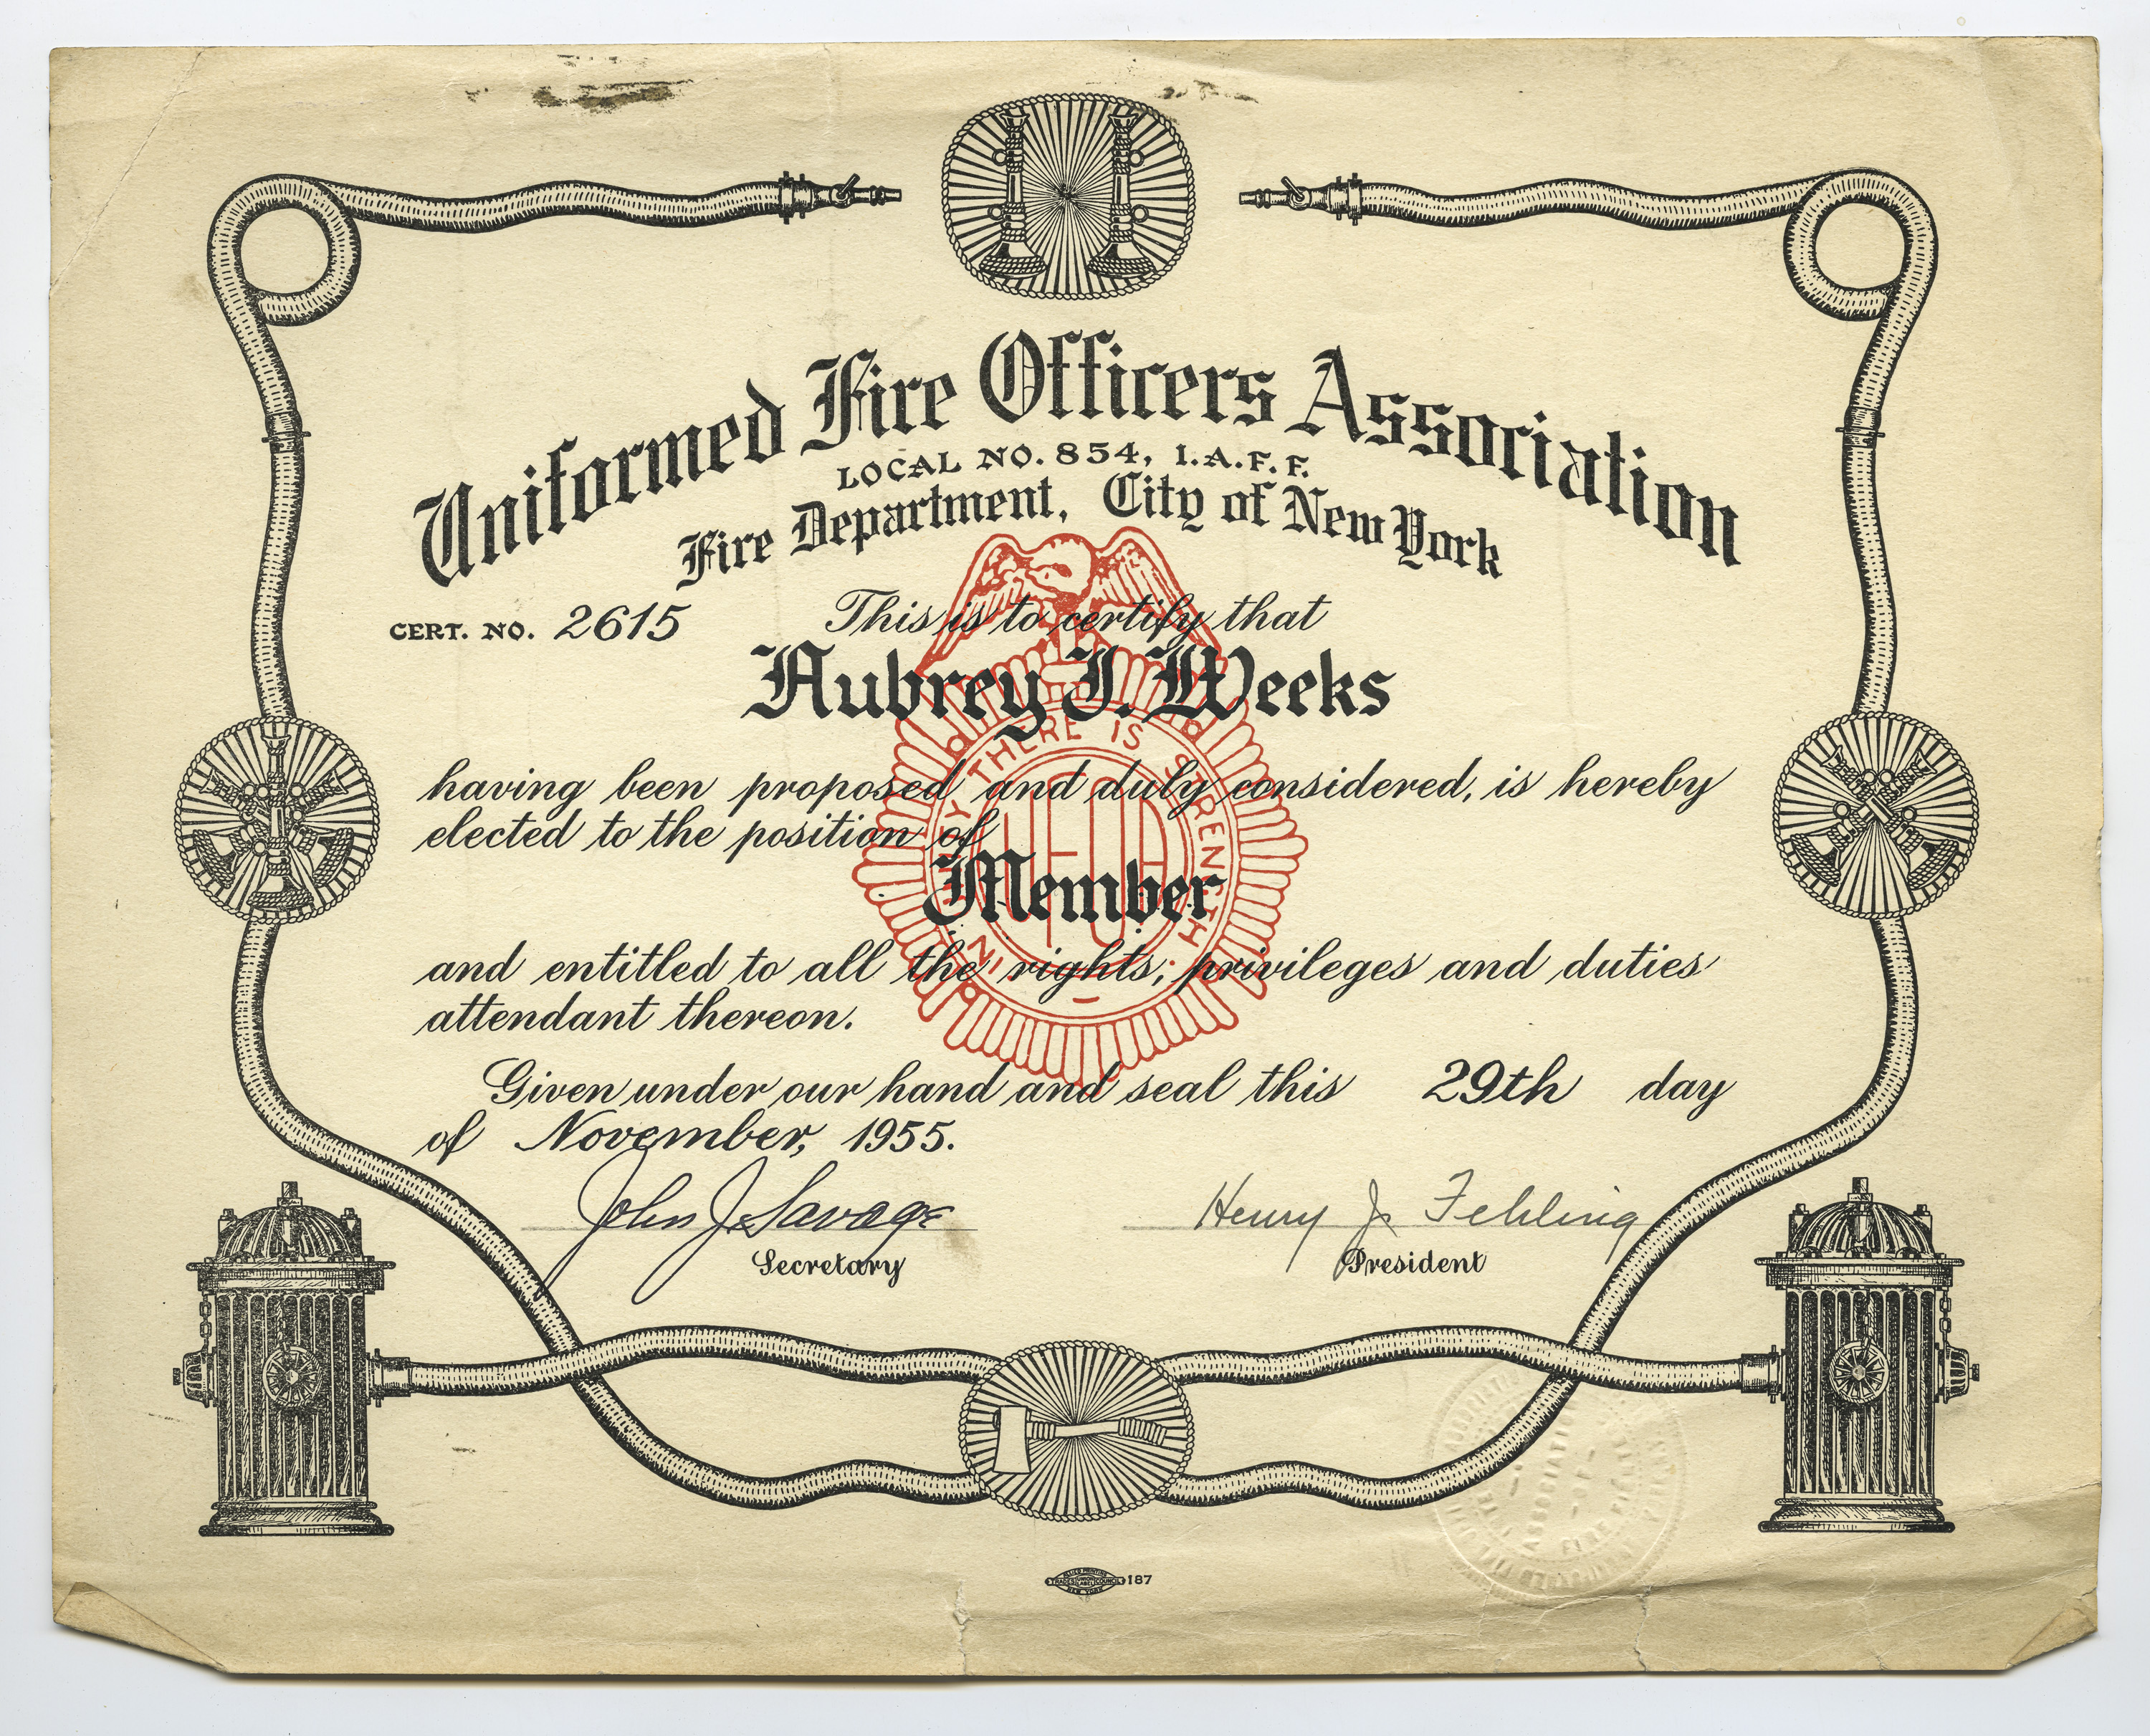 Weeks' Membership, Uniformed Fire Officers Association, 1955.